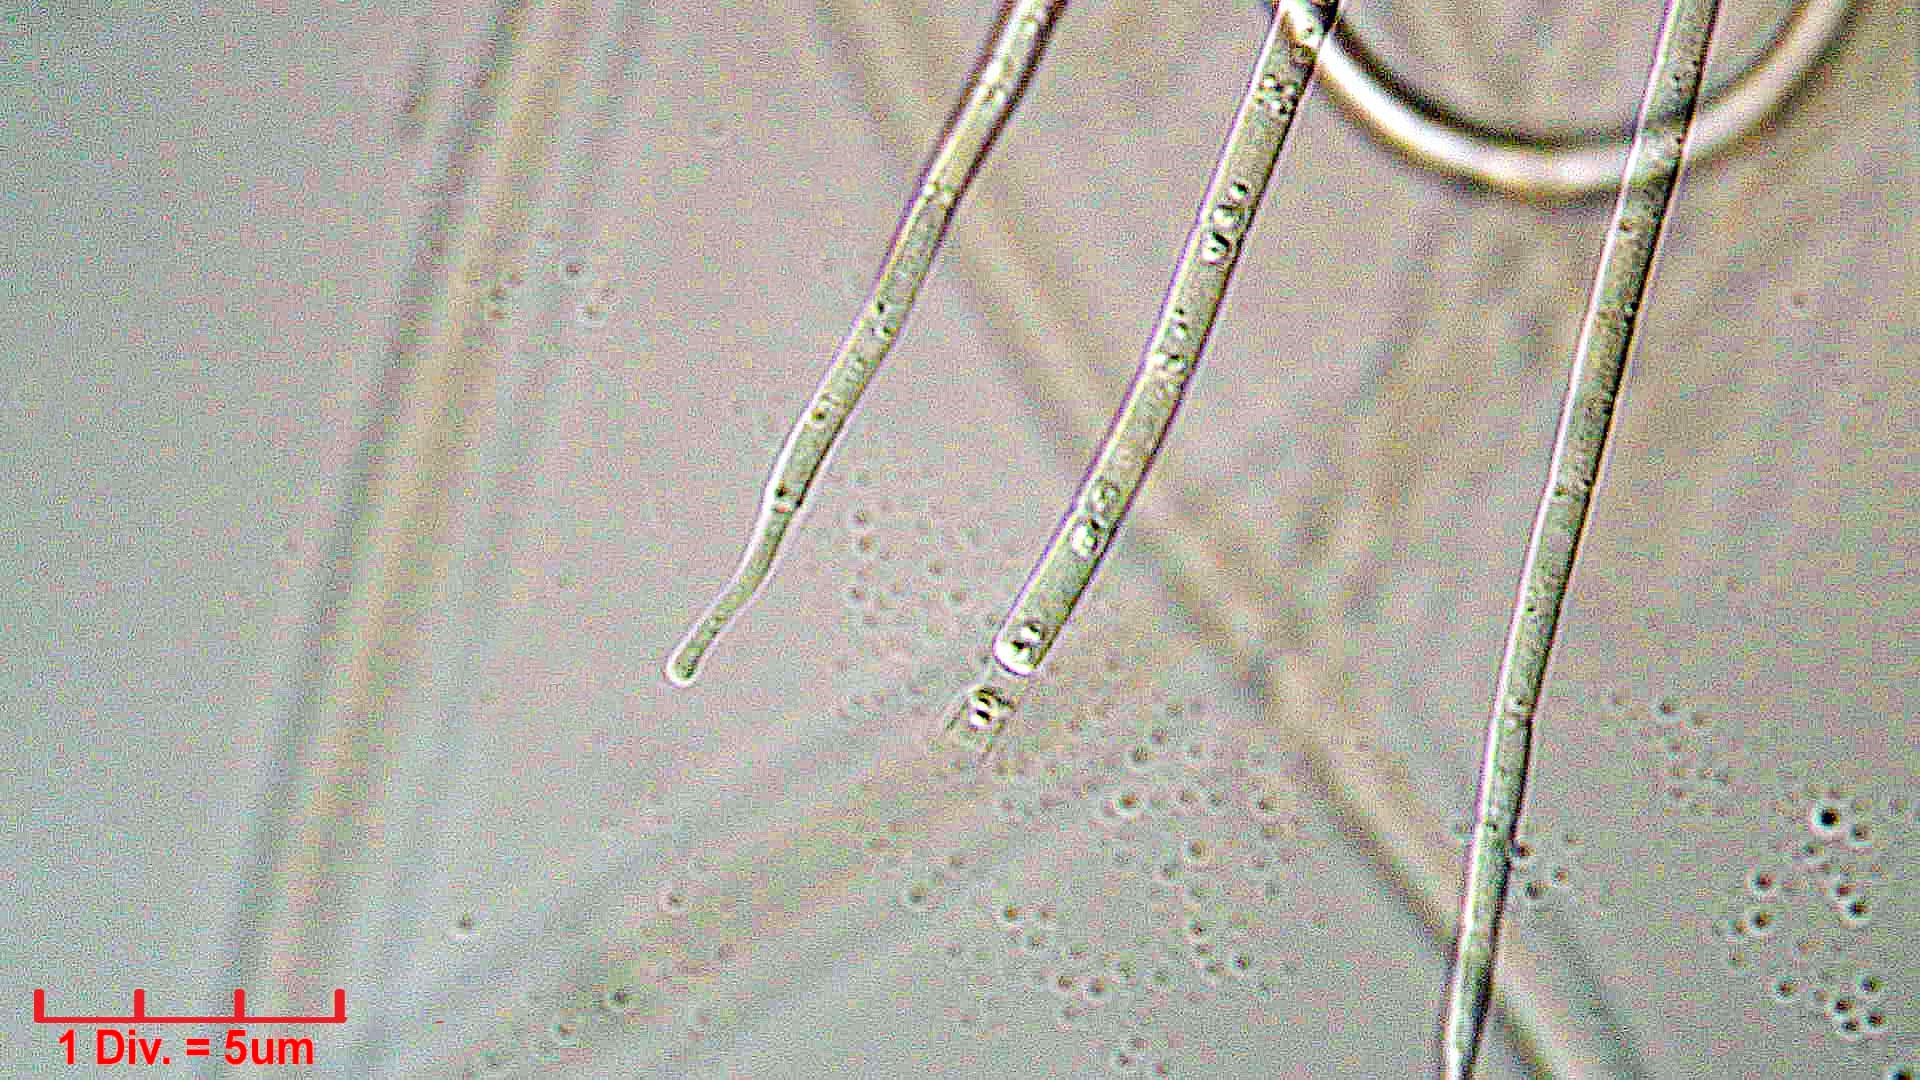 ./././Cyanobacteria/Oscillatoriales/Coleofasciculaceae/Geitlerinema/splendidum/geitlerinema-splendidum-294.jpg